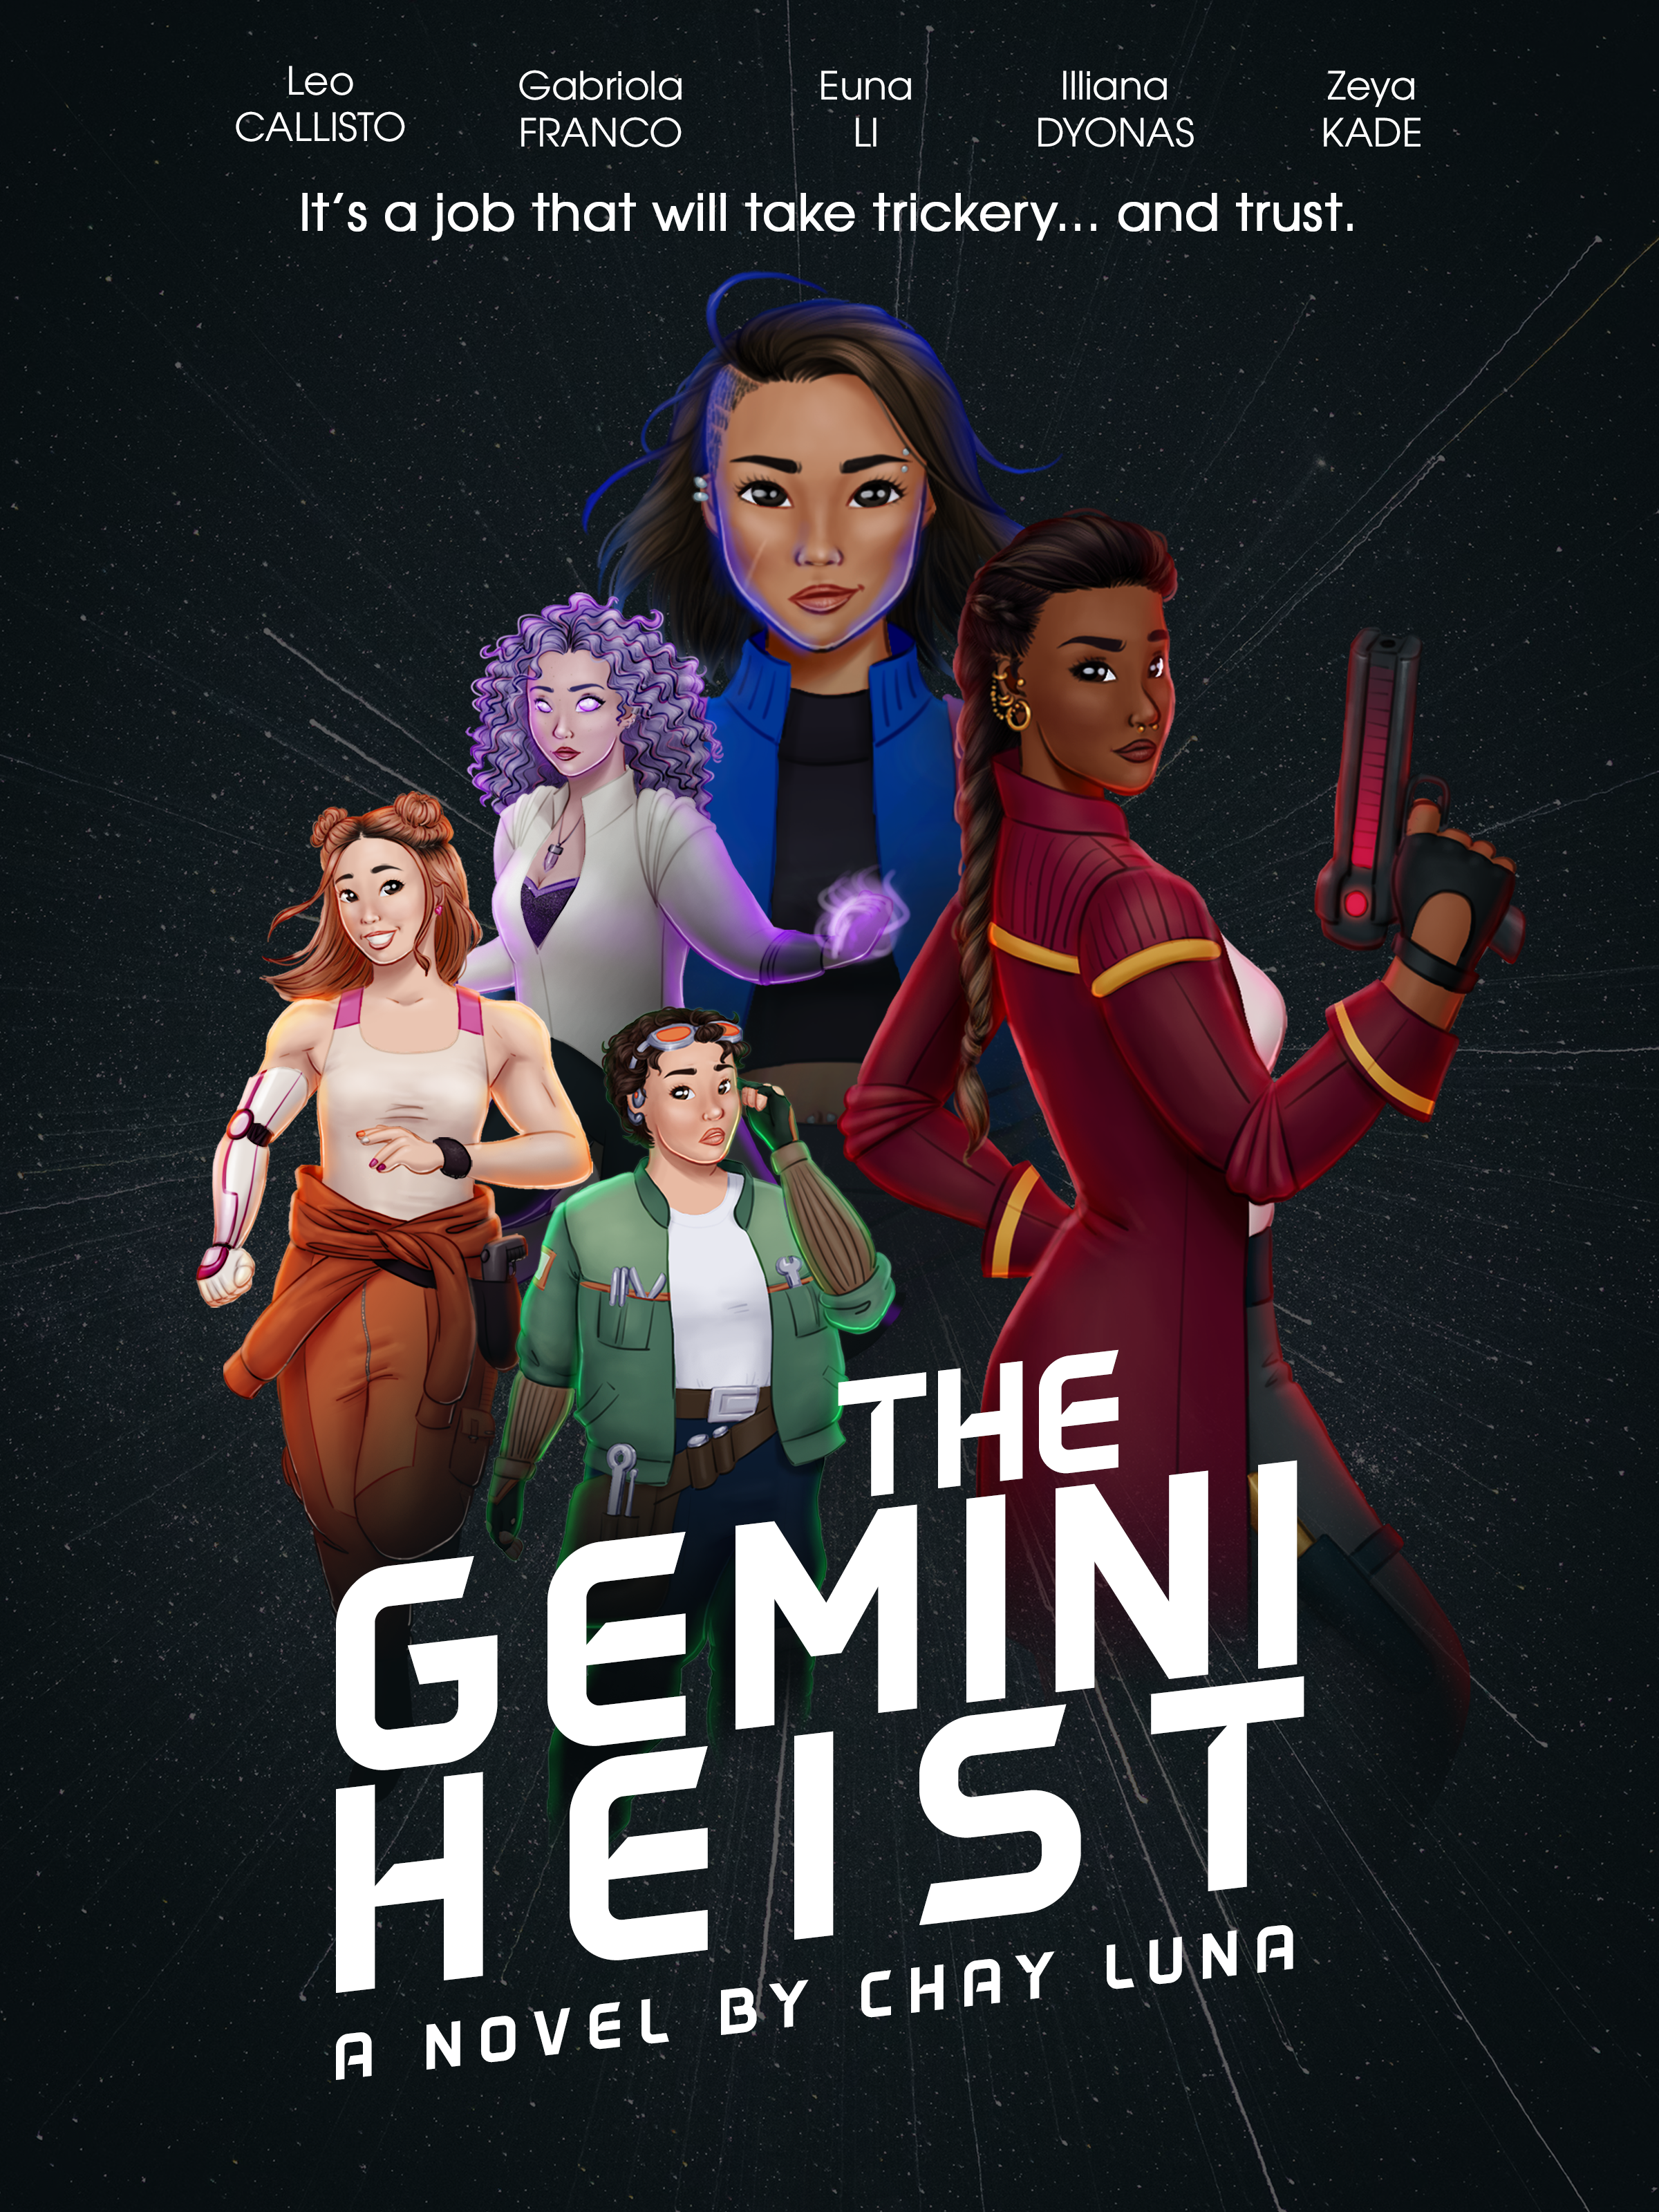 The Gemini Heist book cover